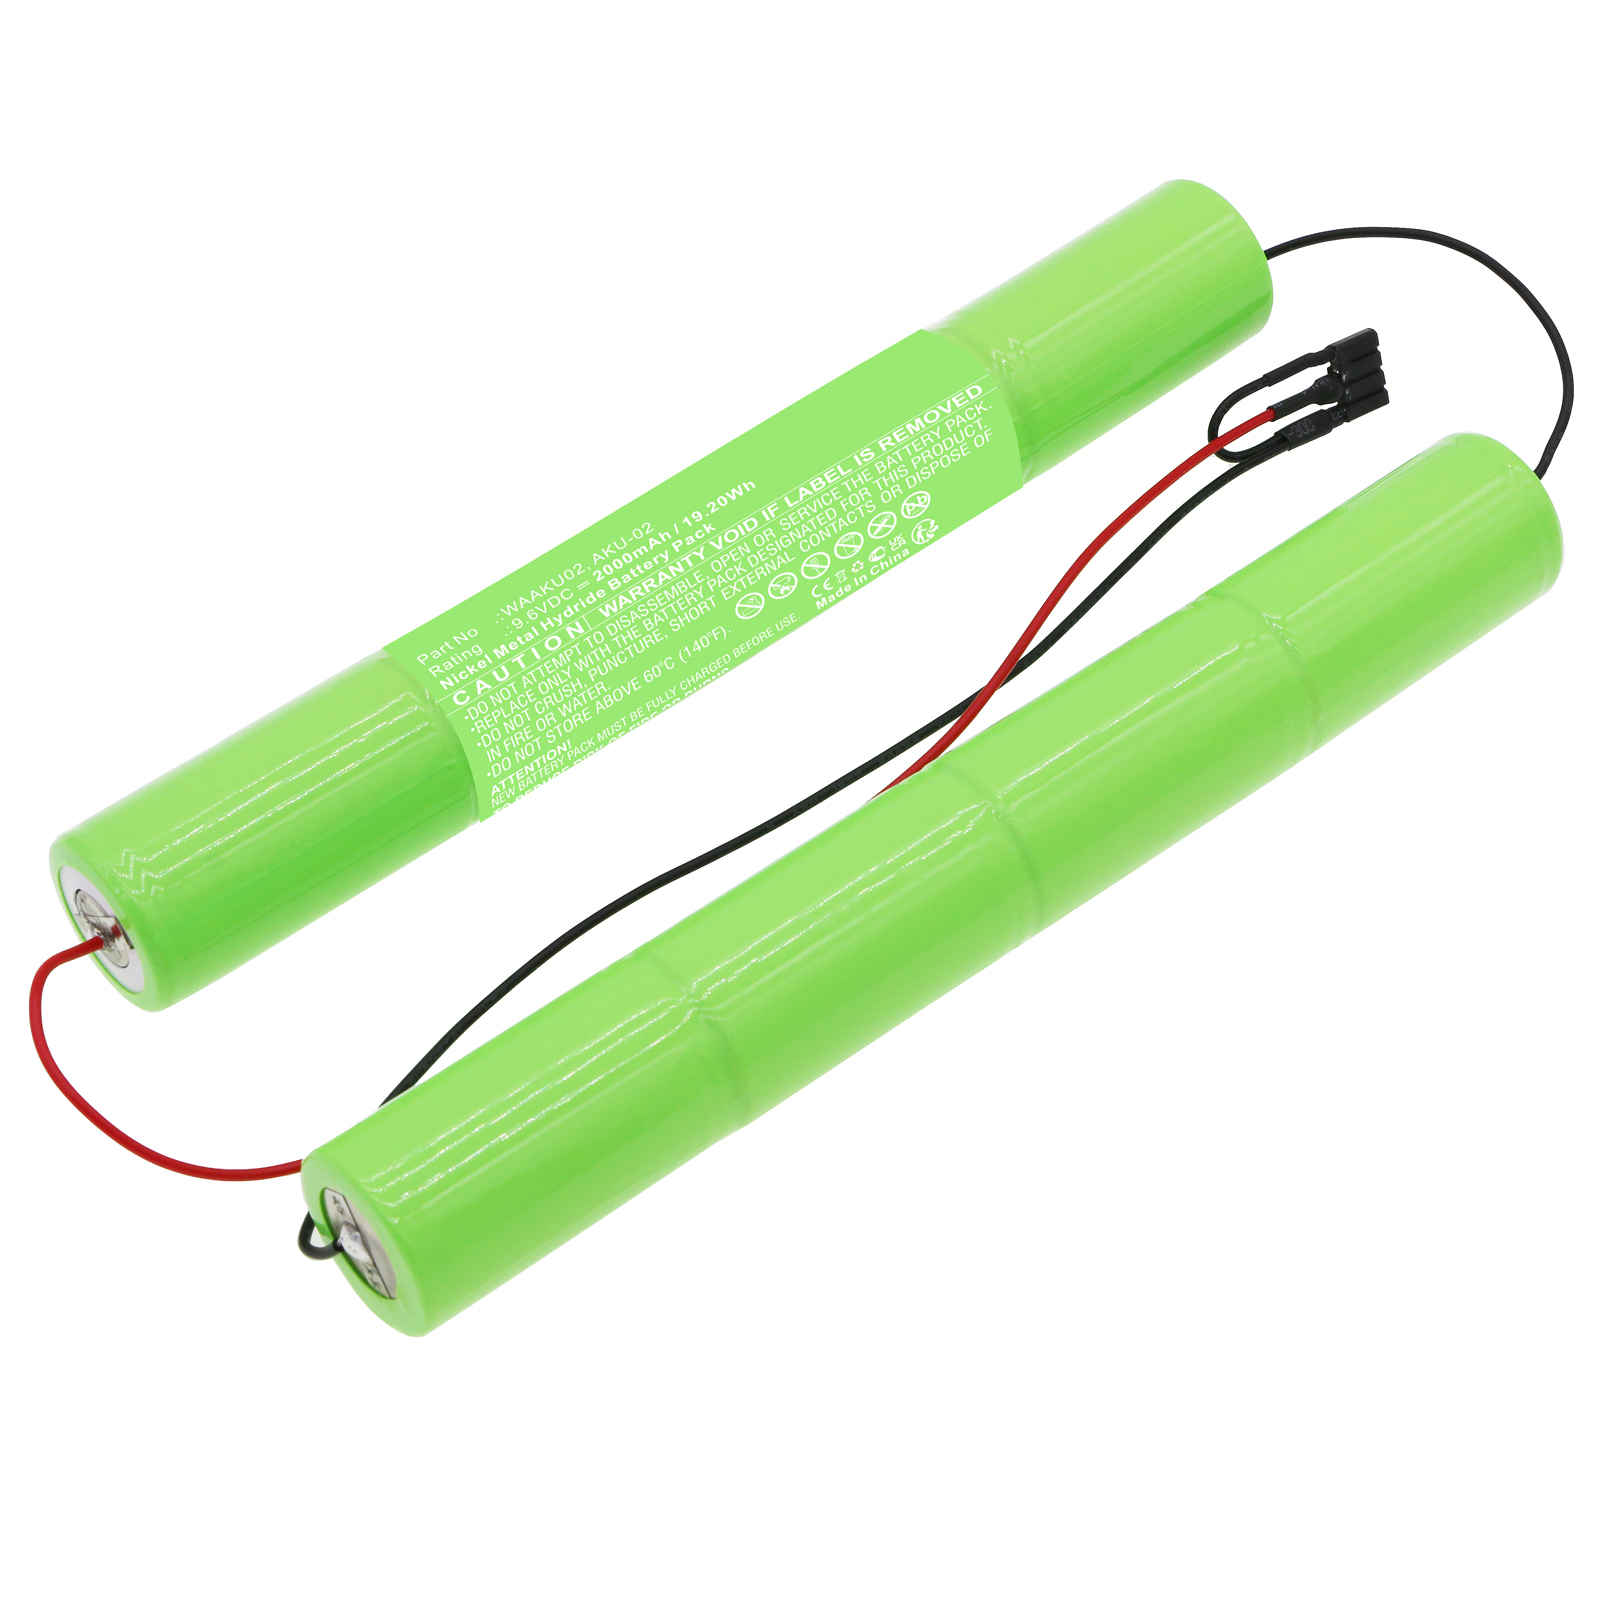 Batteries for SonelEquipment